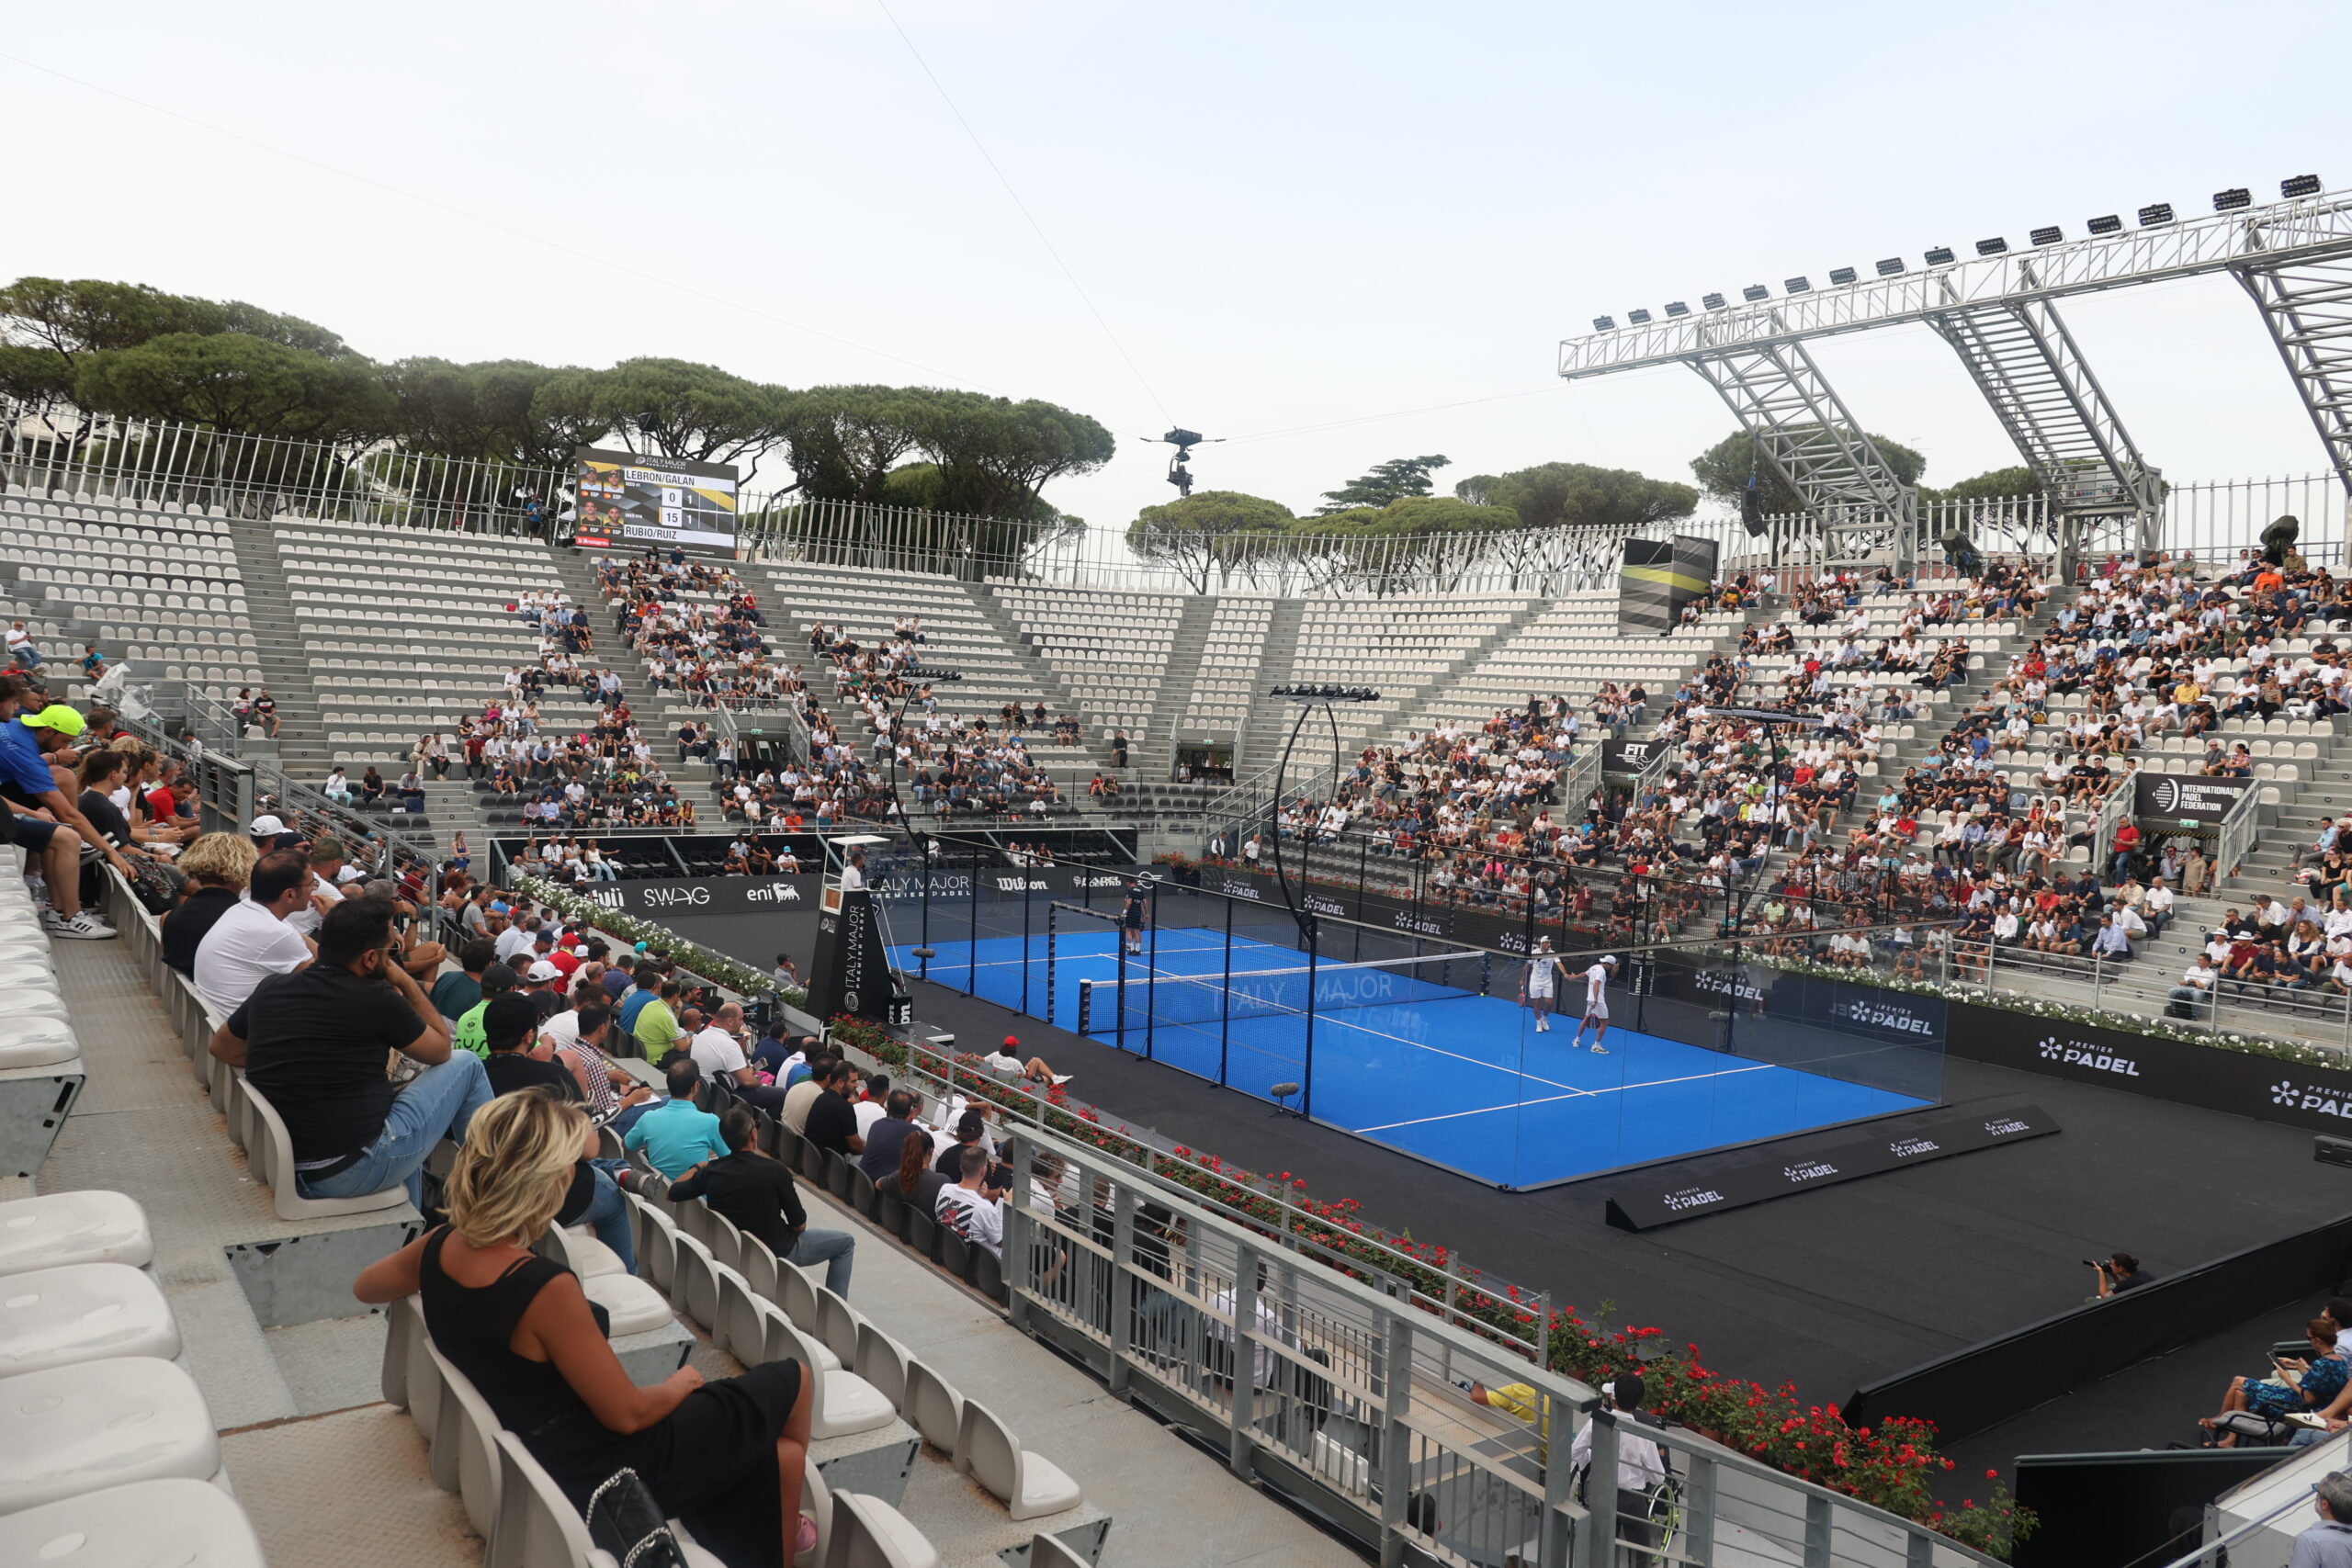 GS Arena (center court) Italië Major Premier Padel